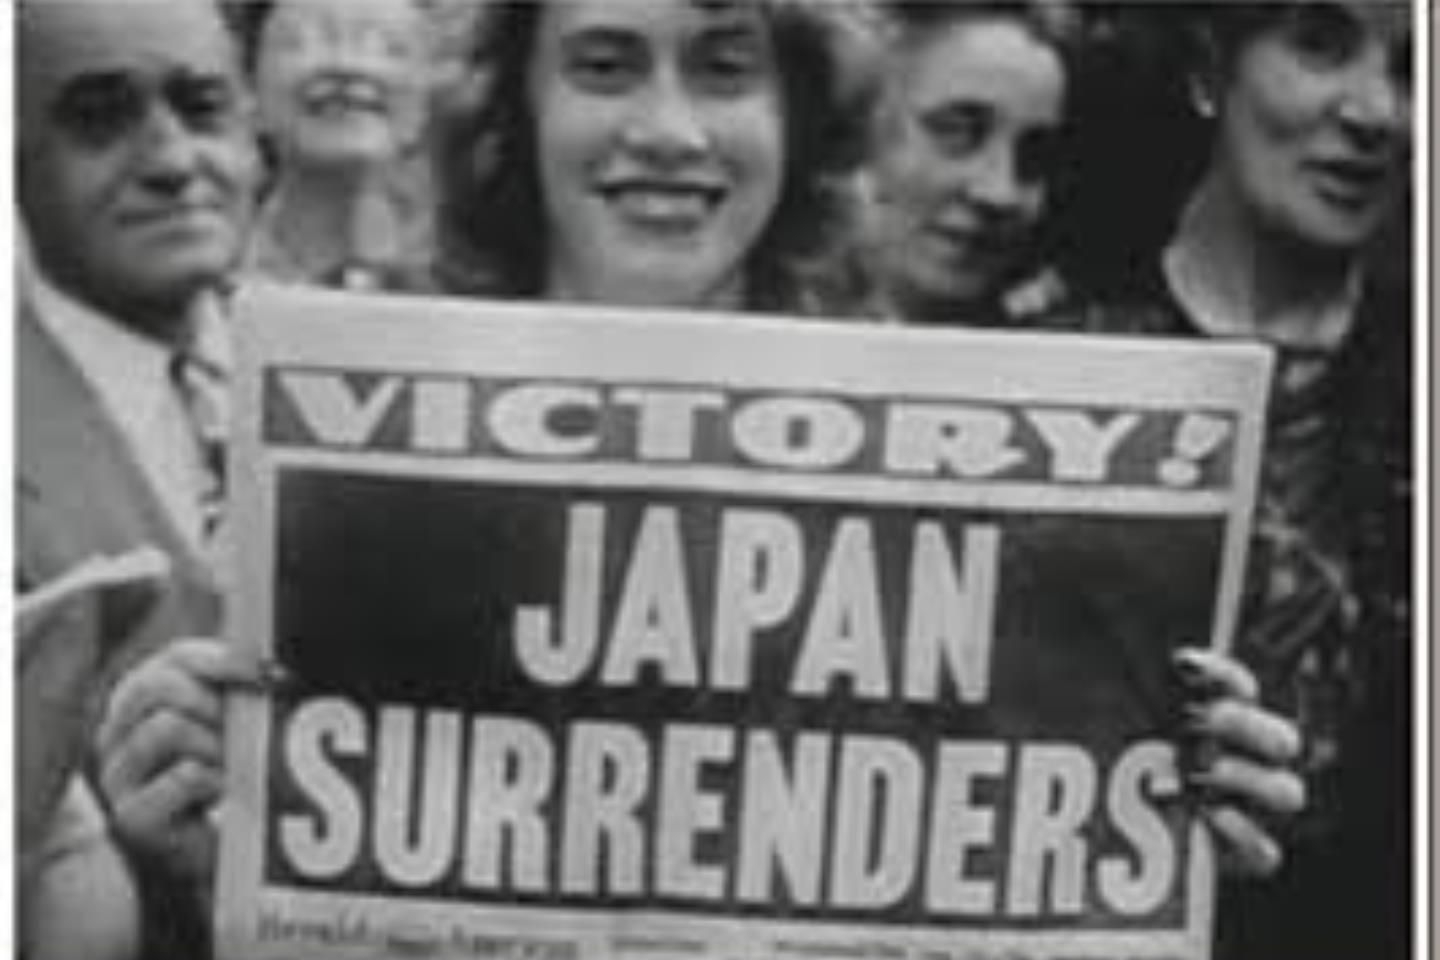 Victory Japan Surrenders WWII Ends